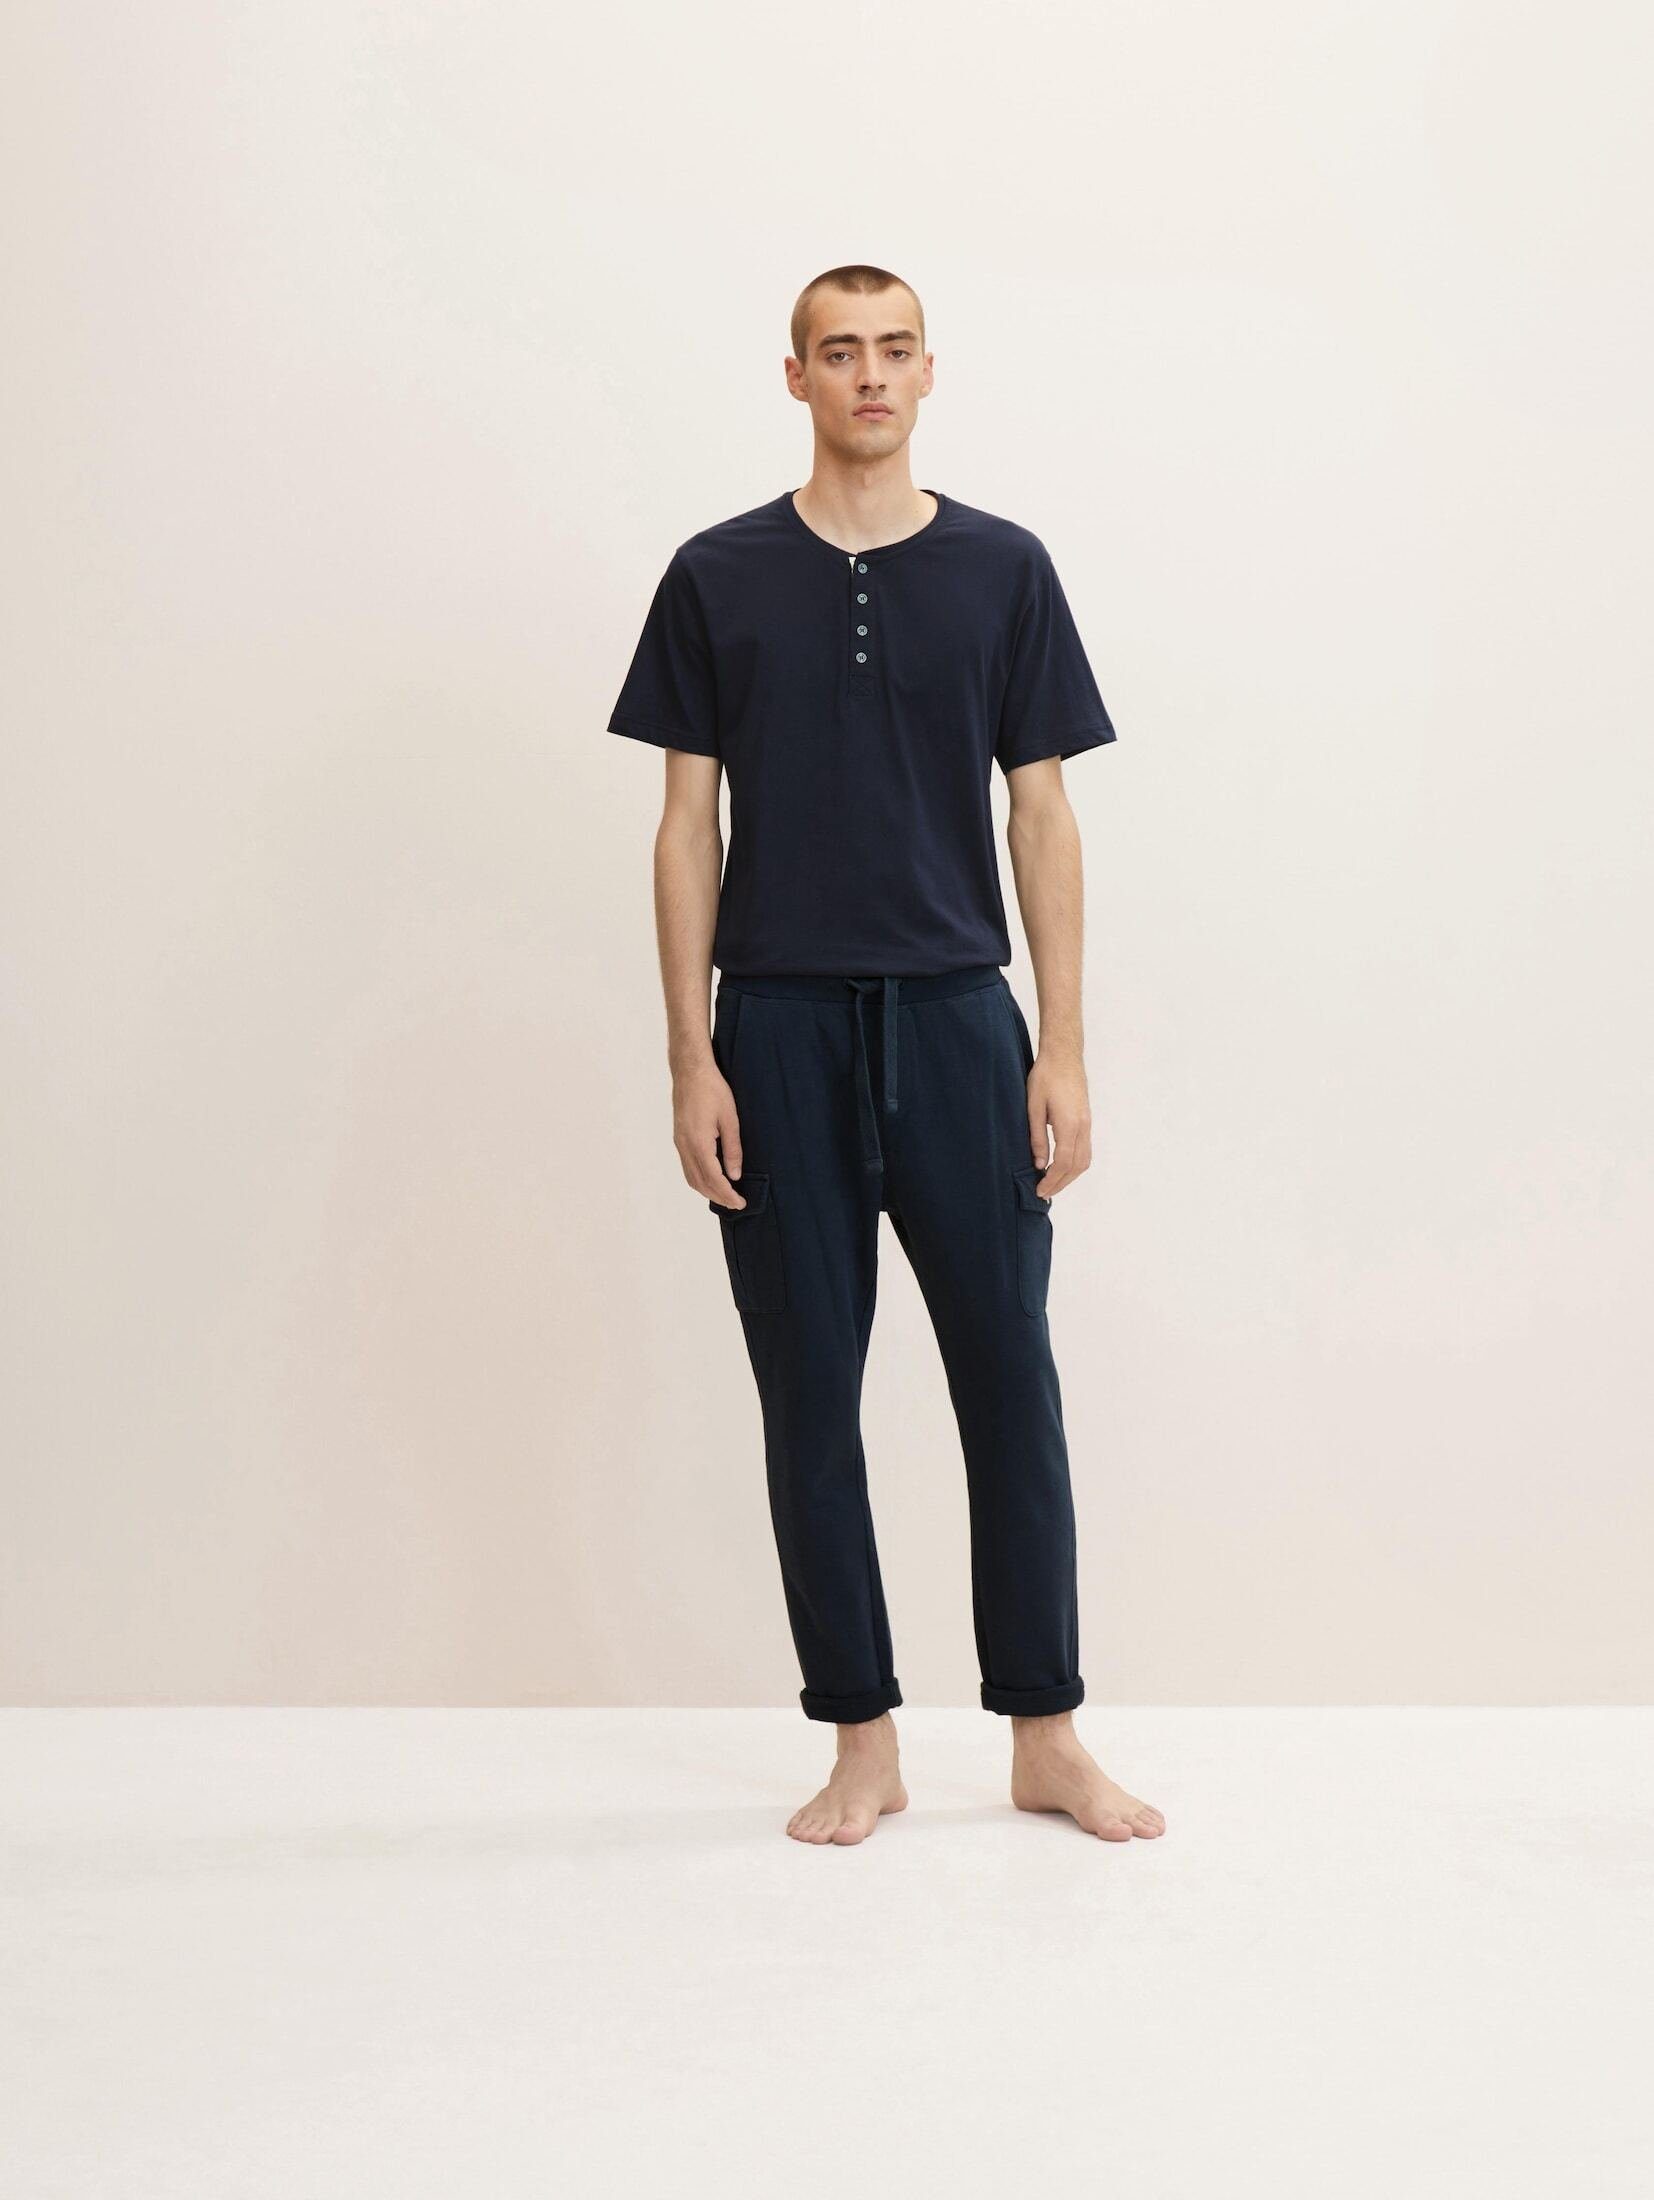 blau-dunkel-uni Pyjamaoberteil T-Shirt TAILOR TOM Pyjama